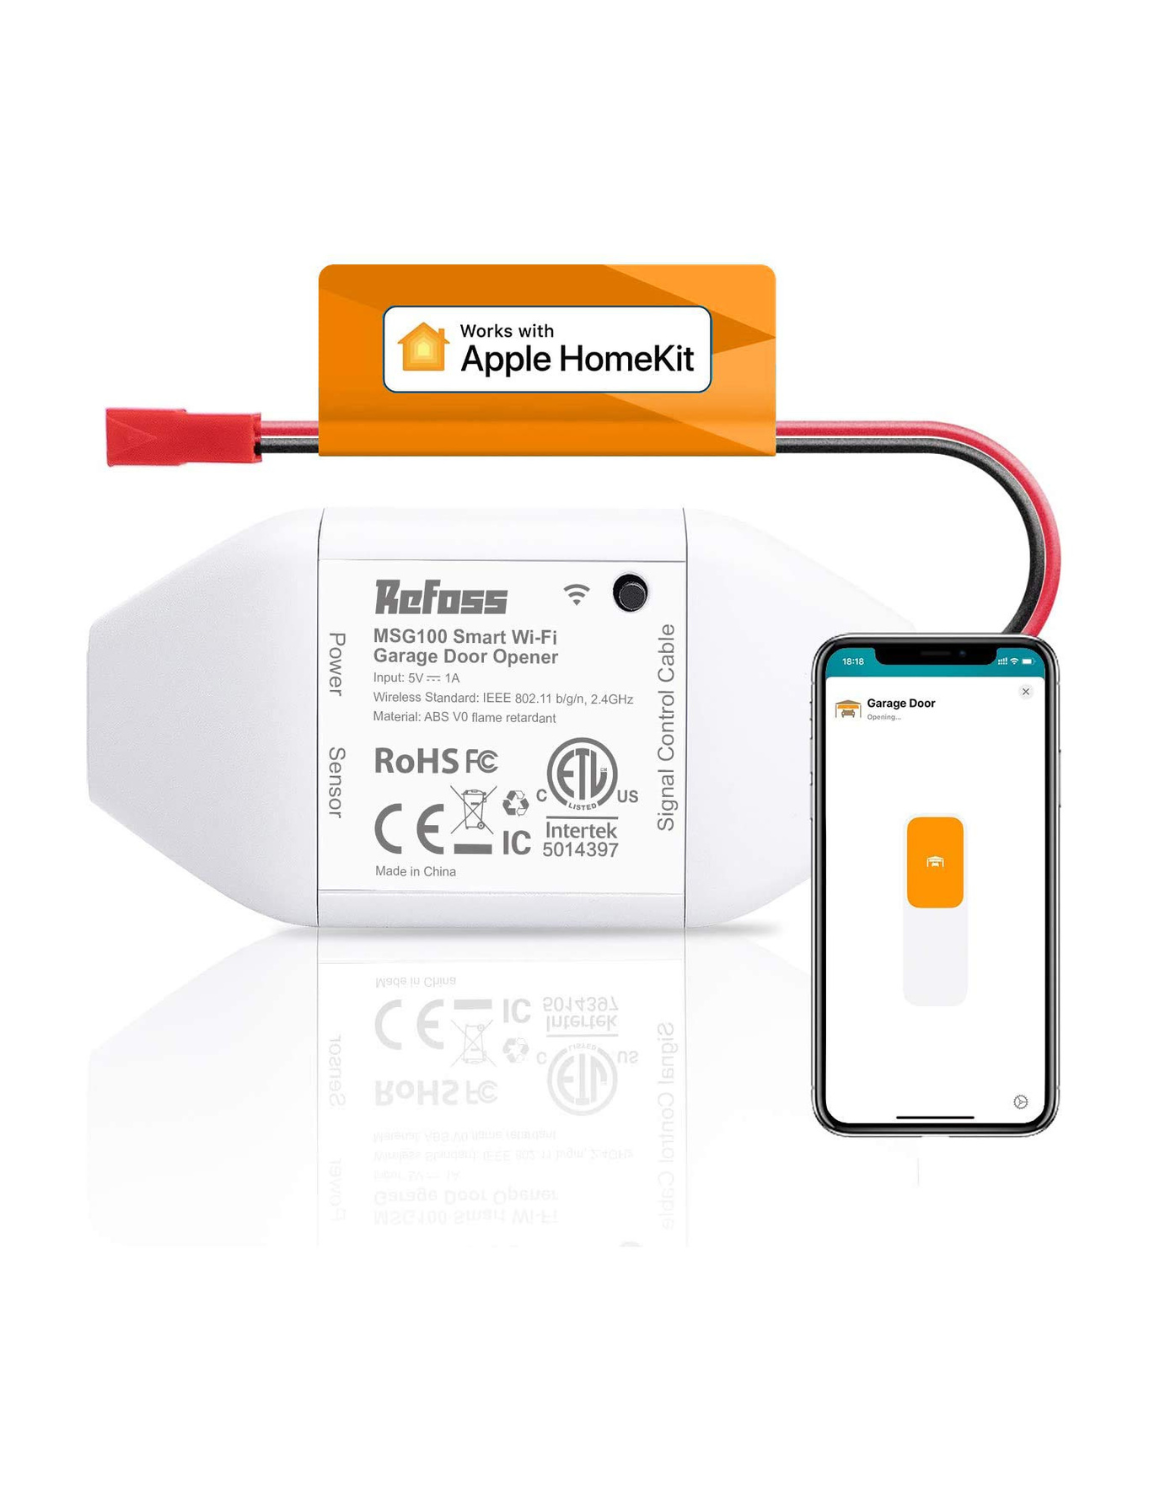 Refoss Wi-Fi Smart Plug, MSS210HK (EU Version) – Refoss Official Store